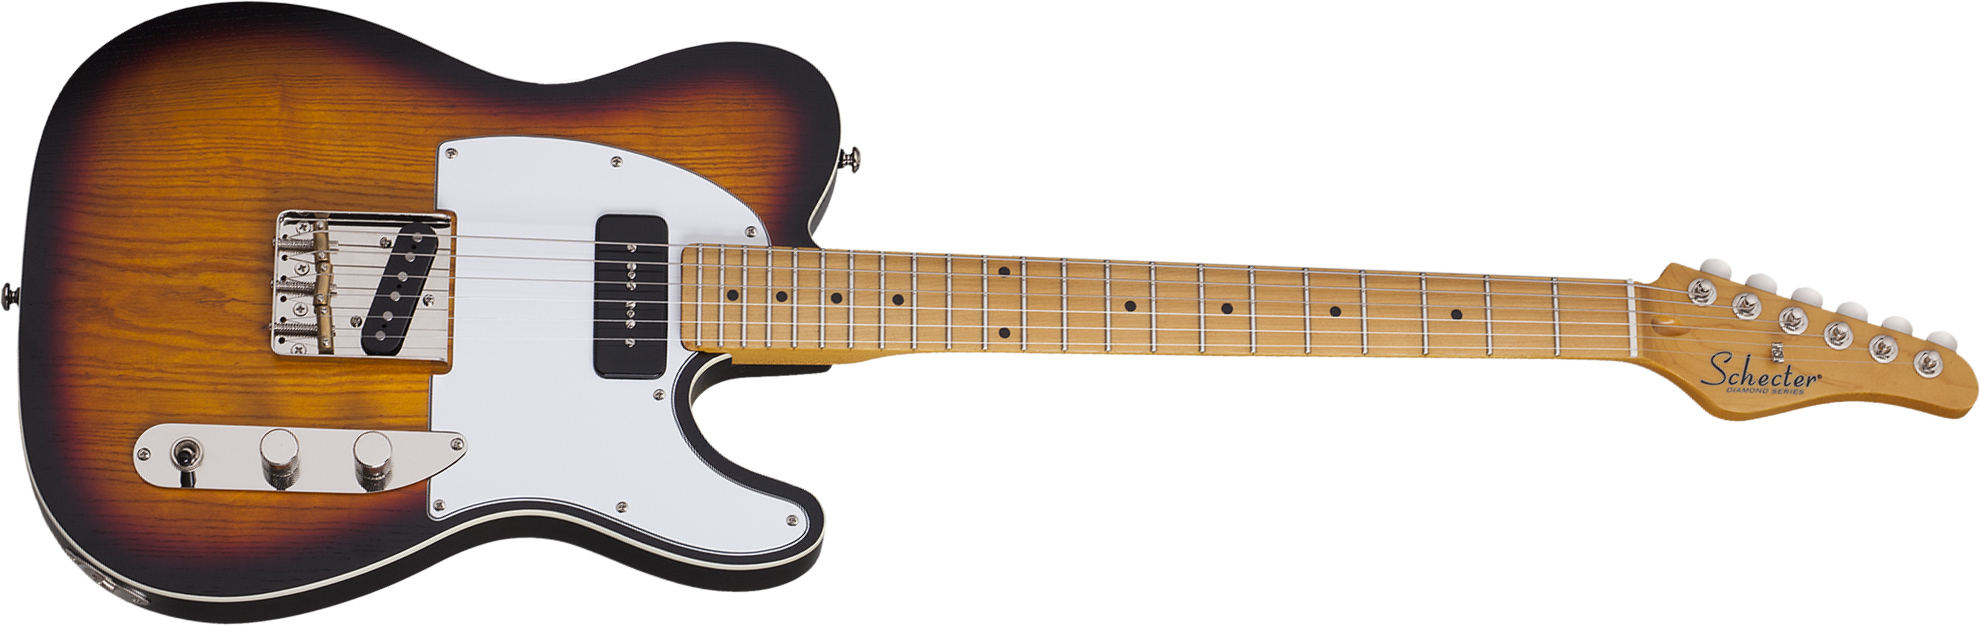 Schecter Pt Special 2s Ht Mn - 3-tone Sunburst Pearl - Televorm elektrische gitaar - Main picture